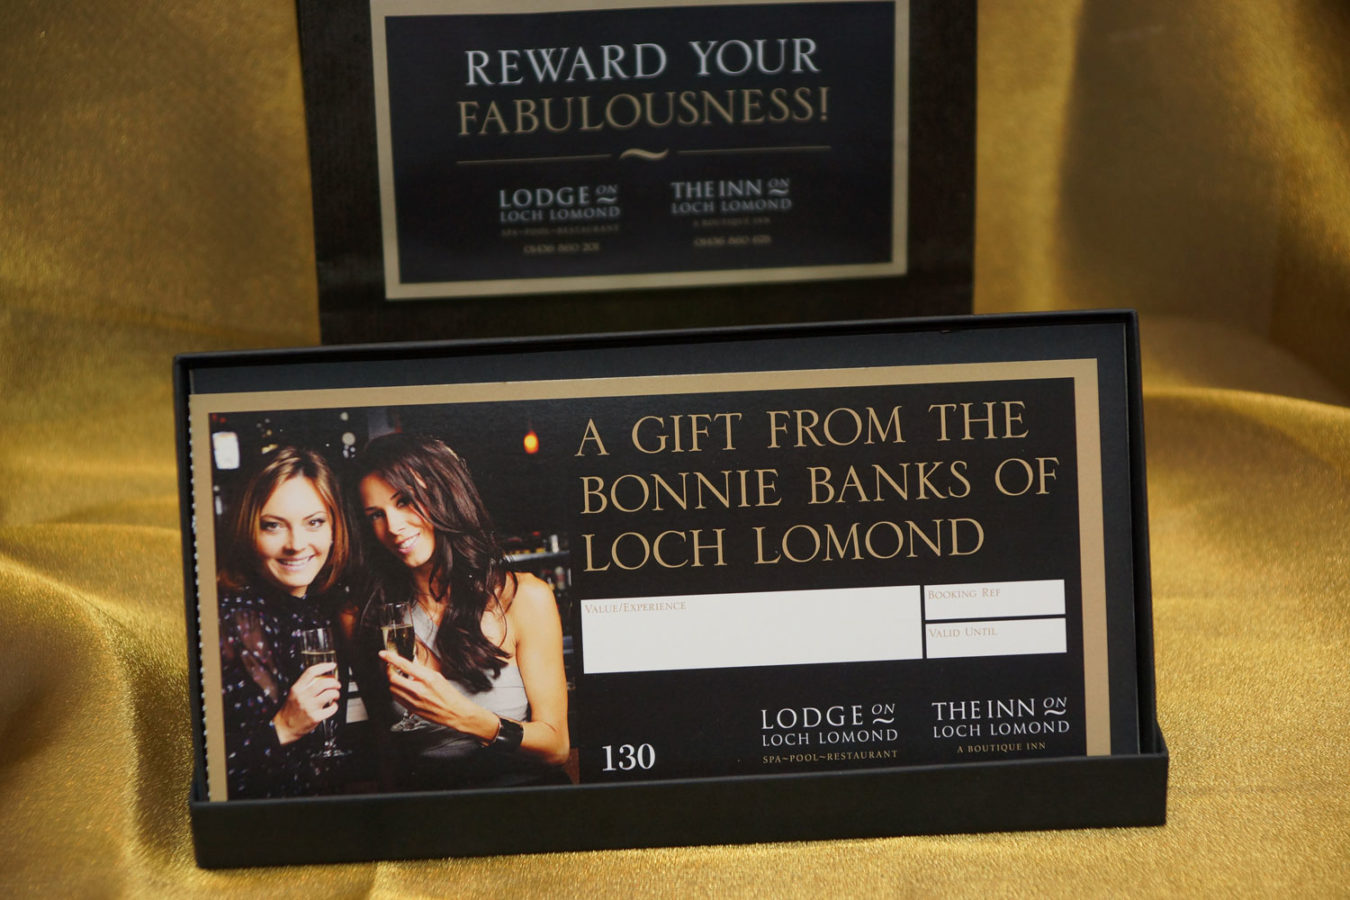 The Inn on Loch Lomond Gift Vouchers